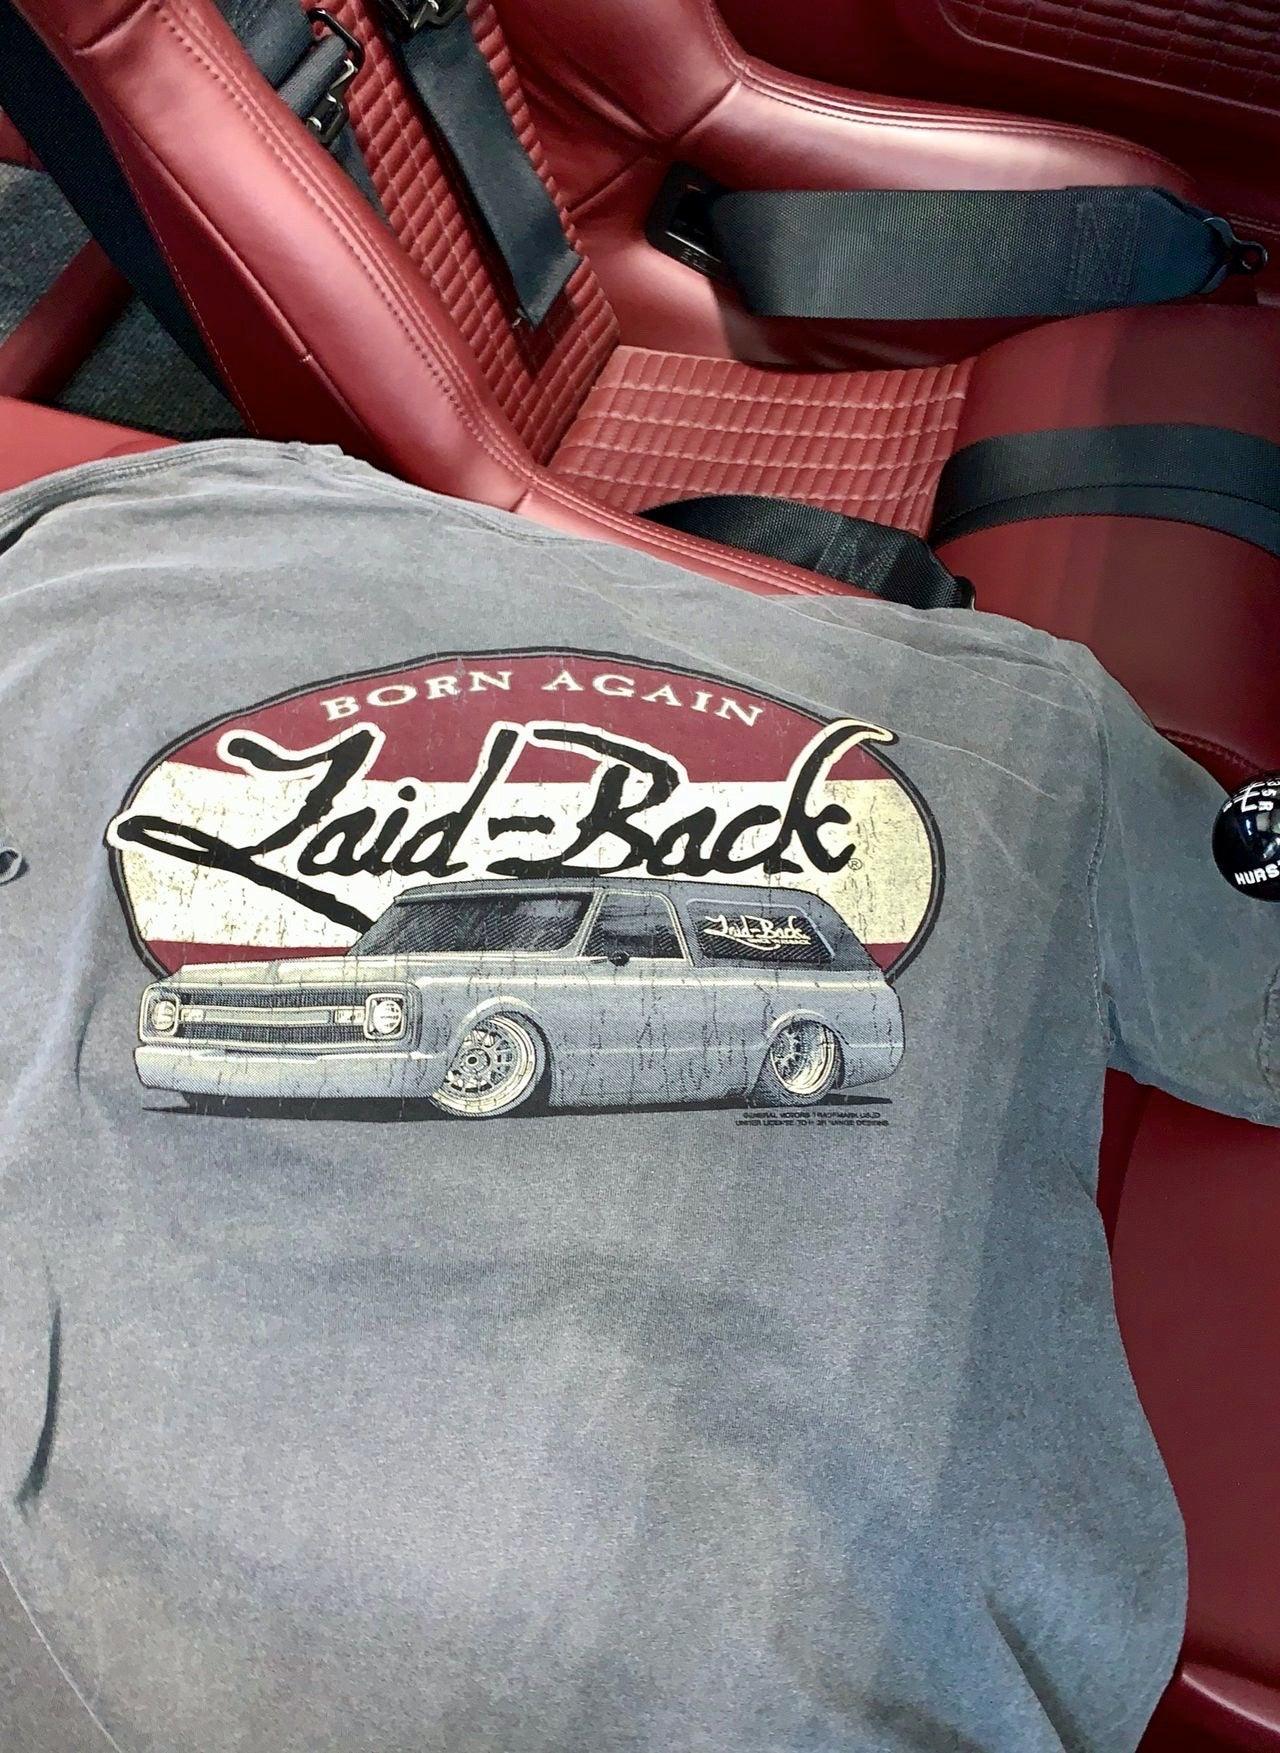 Born Again Blazer T-Shirt - Laid-Back